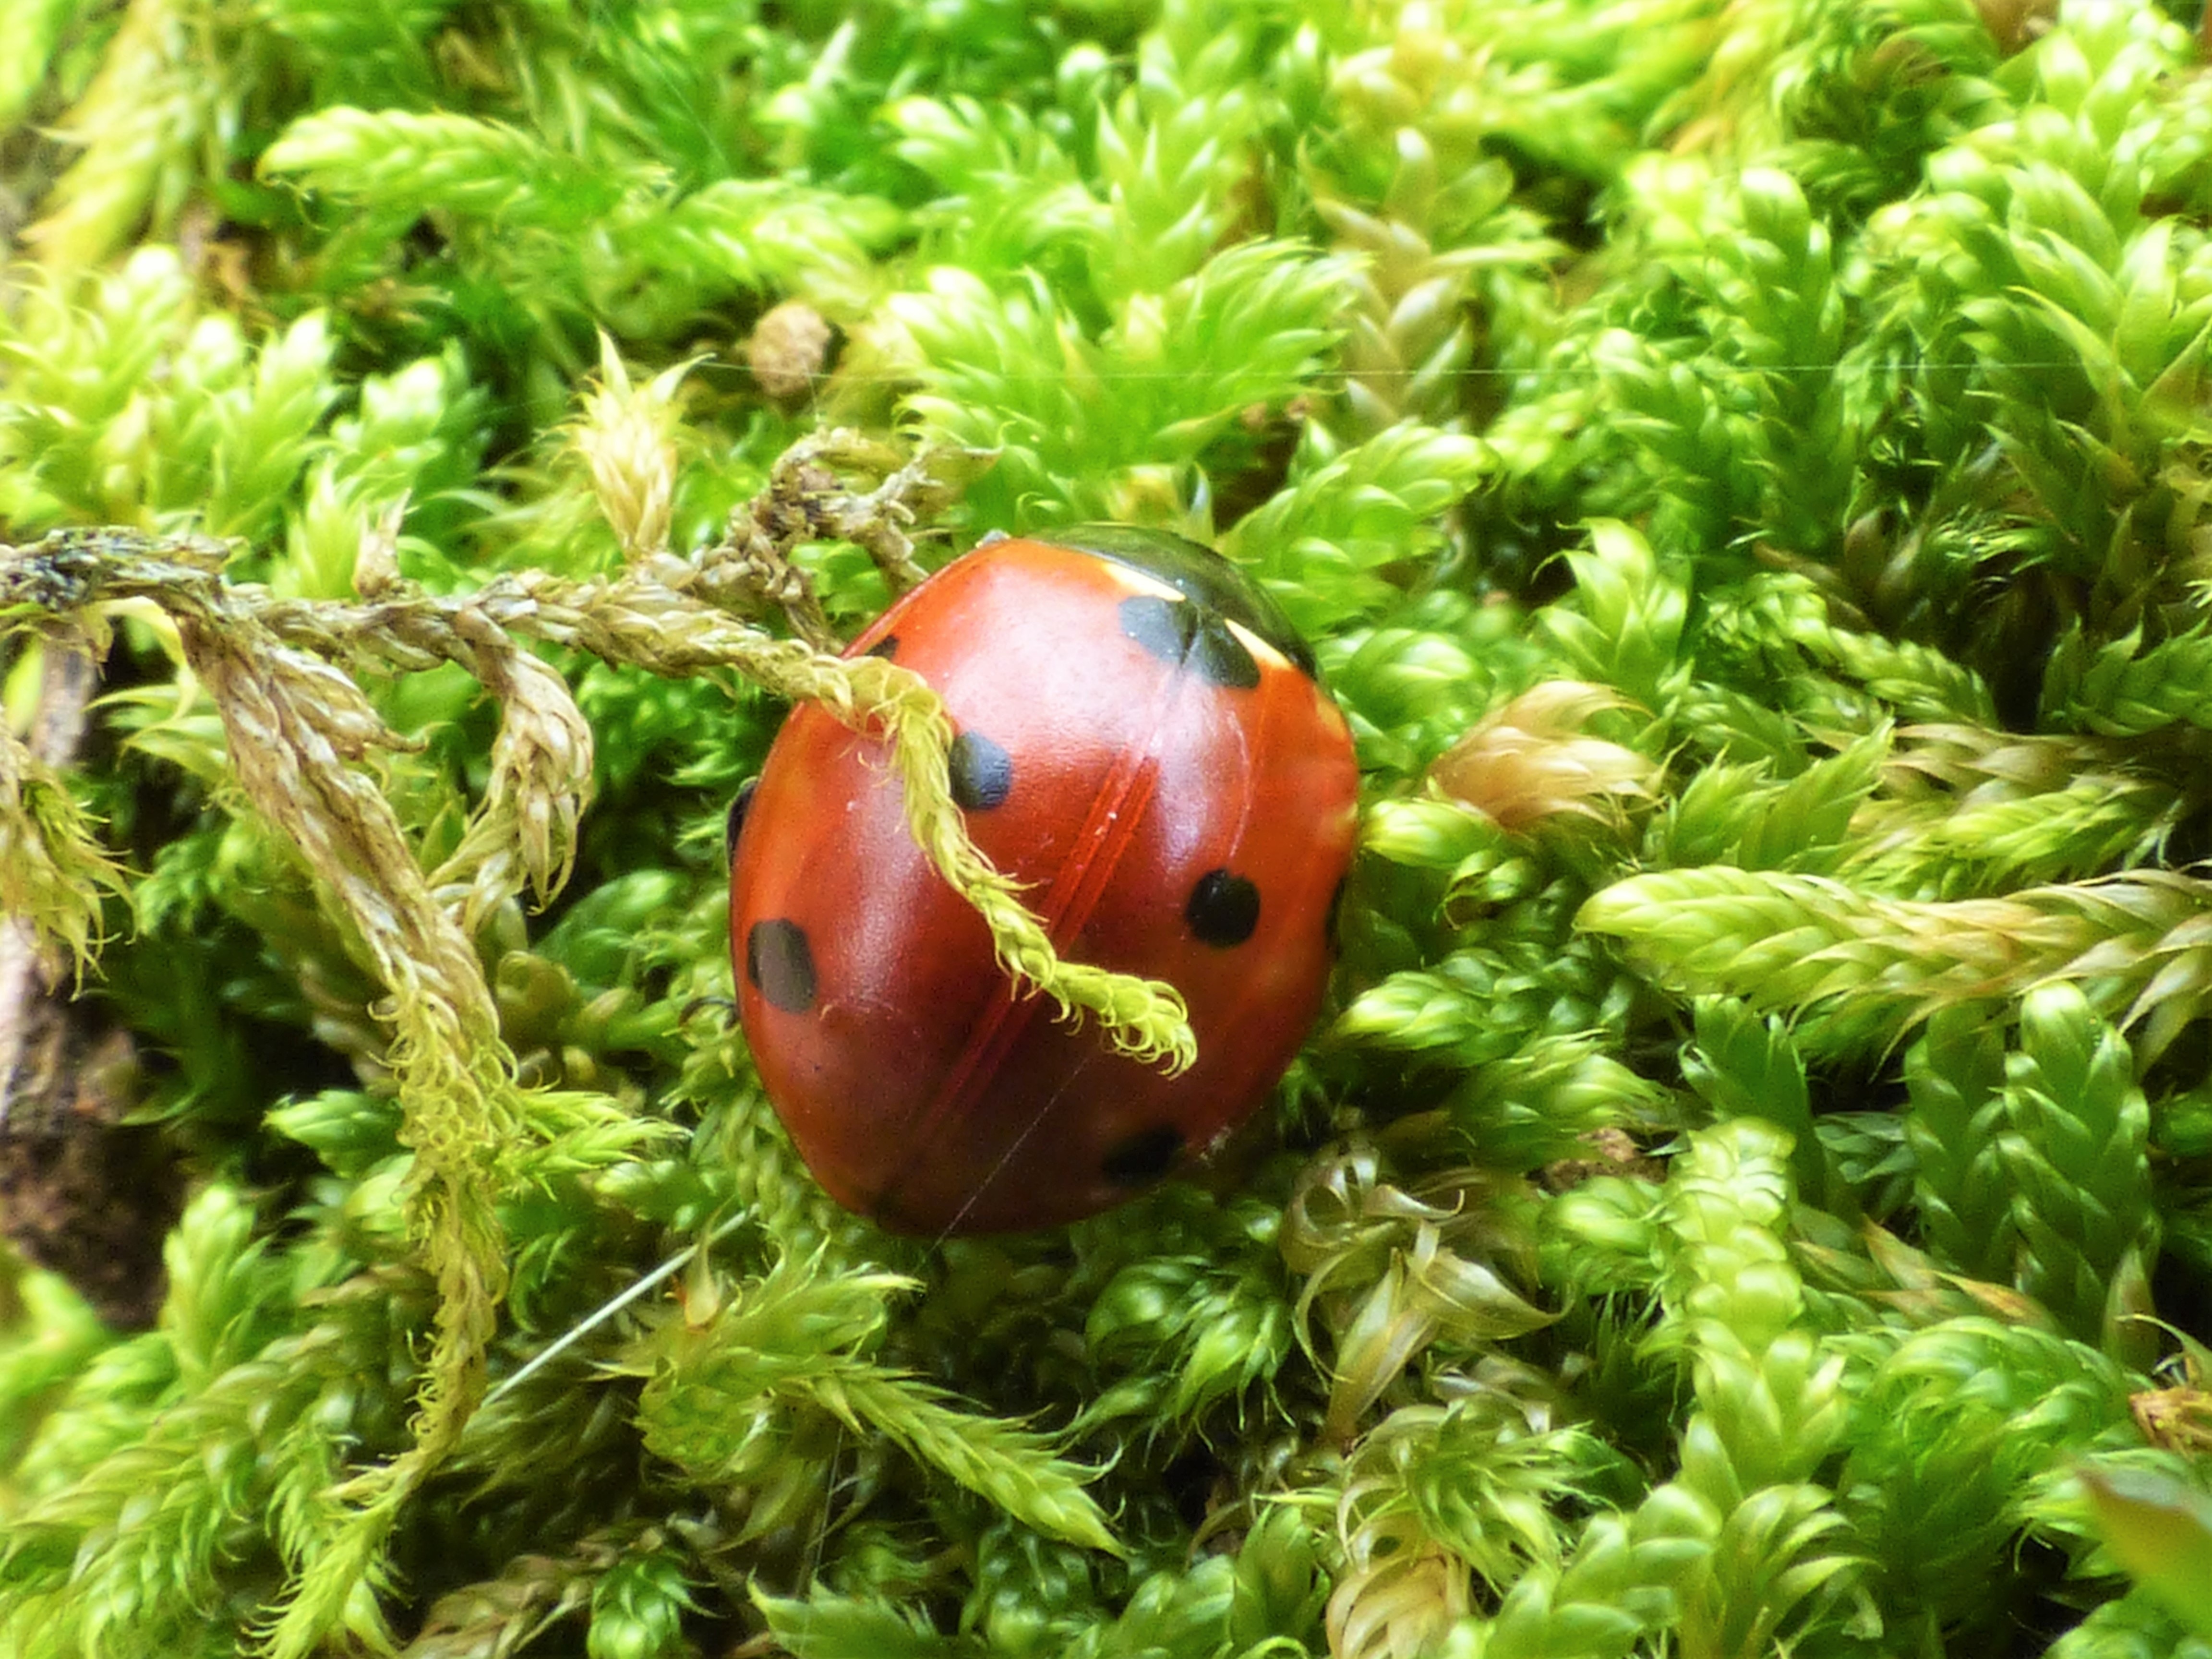 ladybug on green grass